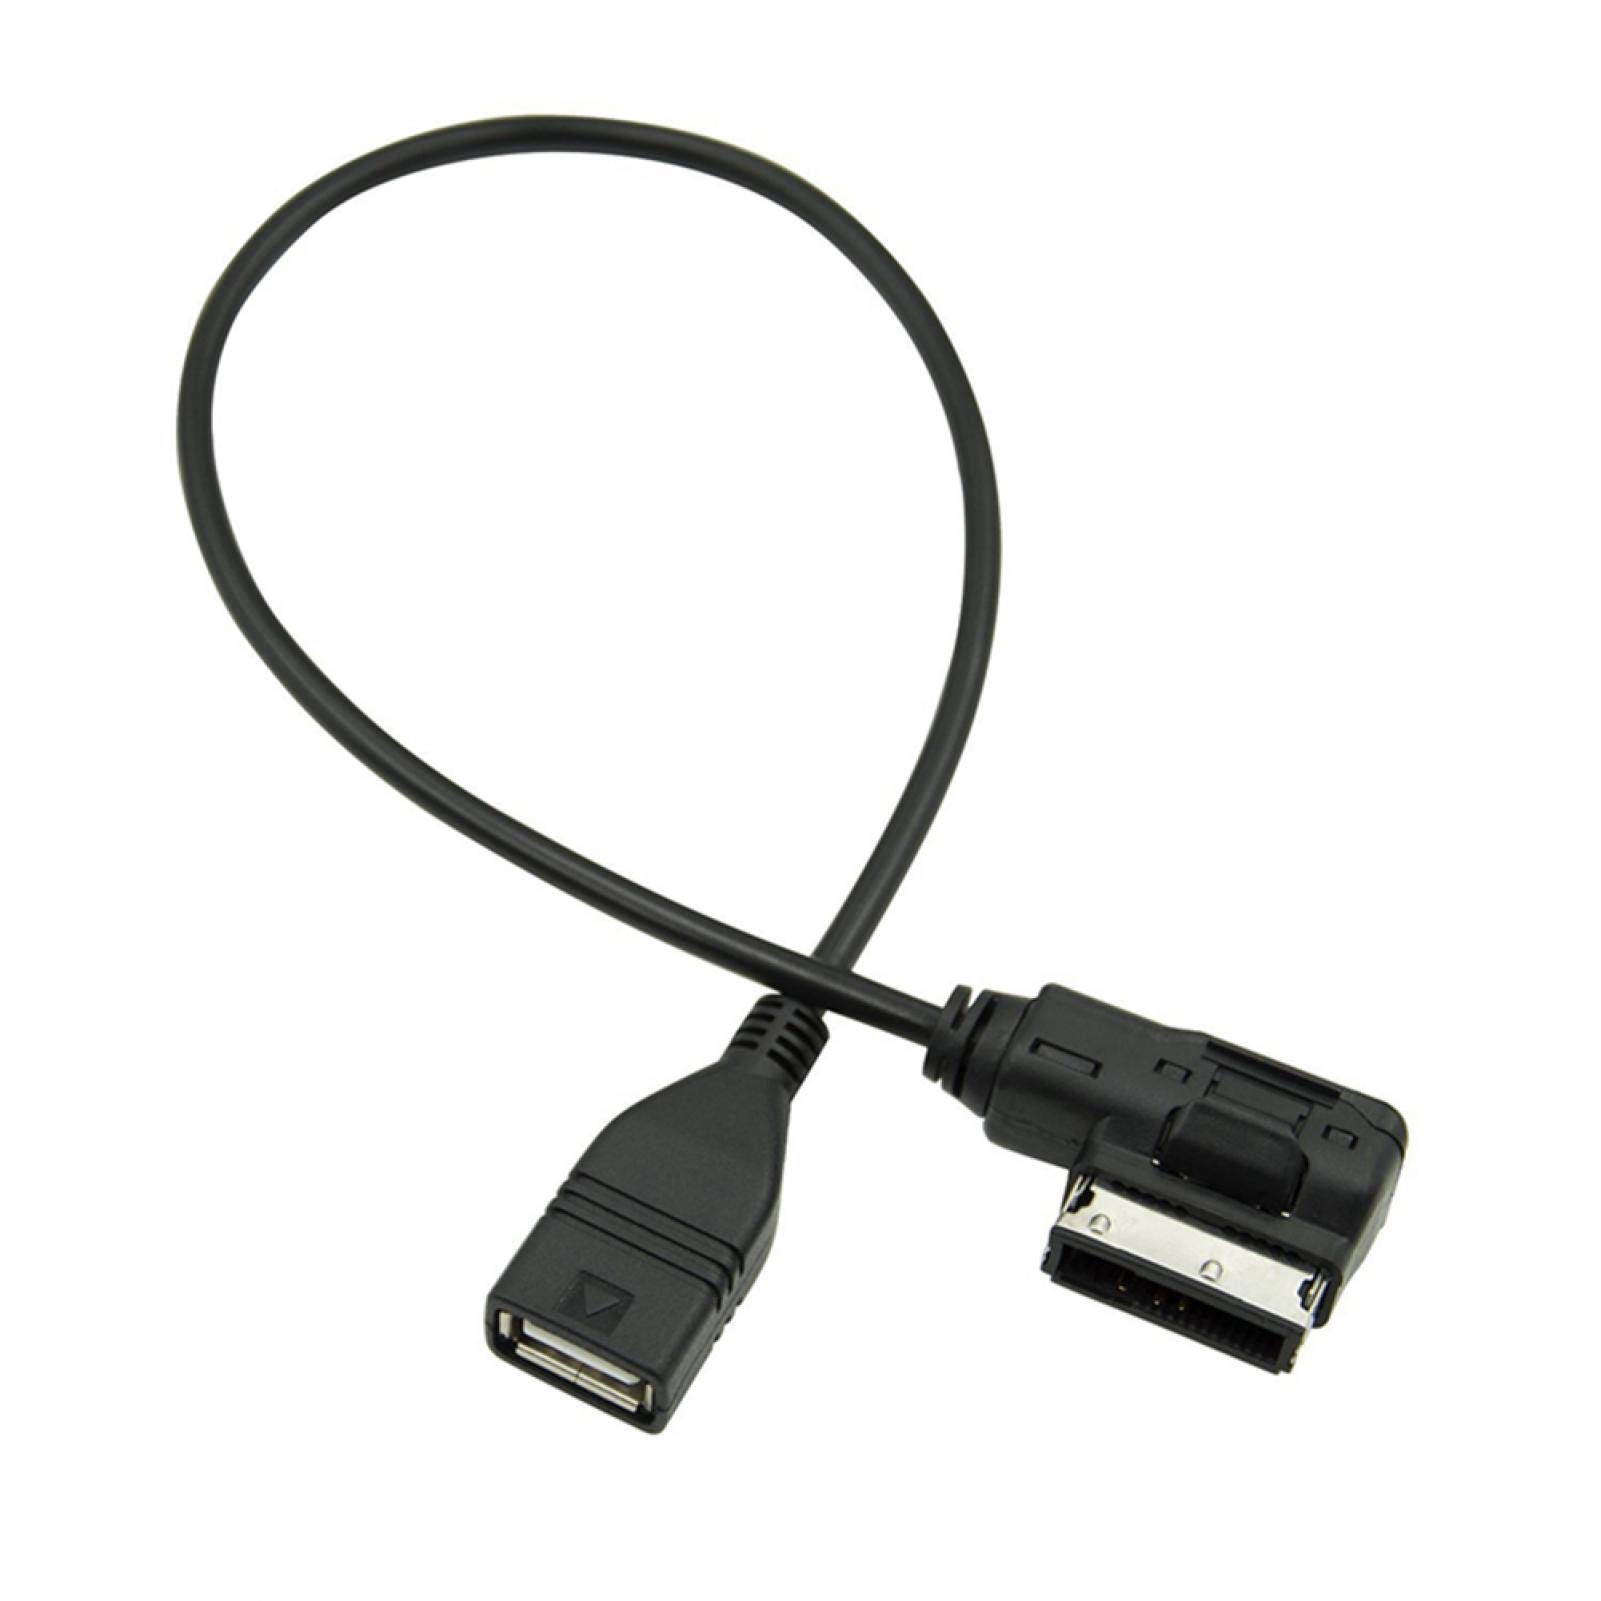 Kabel USB Musikschnittstelle AMI MMI AUX MP3 Adapter für Audi A3 S4 A5 S5 A6 S6 A7 A8 Q5 Q7 R8 Ersatzzubehör für audi a7 mmi usb ami mdi usb audi a3 hagelschutz datenkabel audi a5 adapter on audi a6 4 von Yosoo